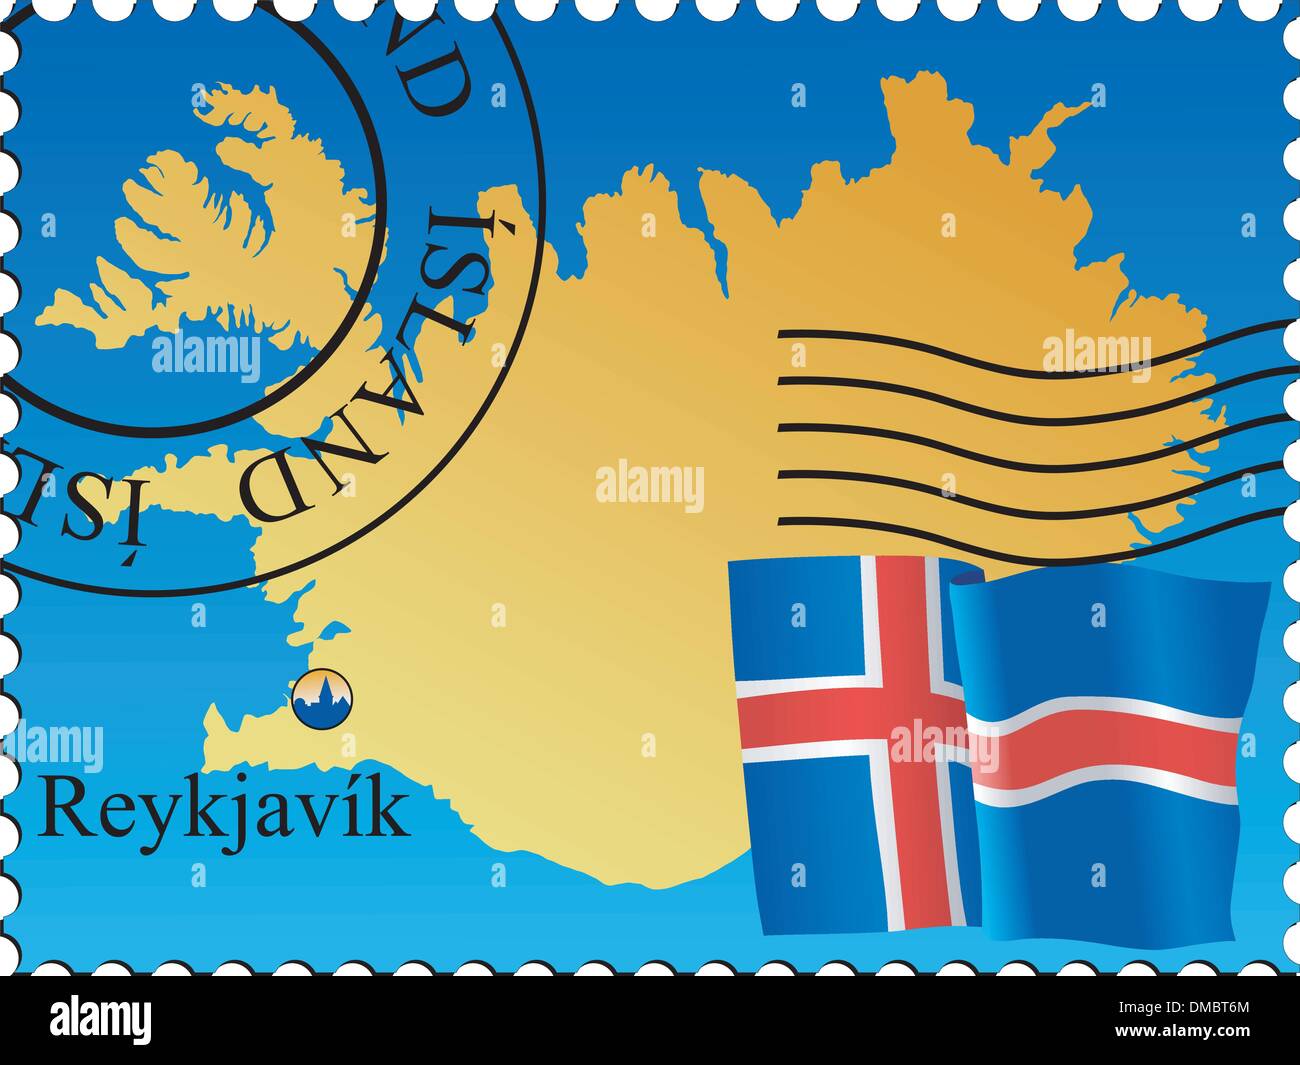 Reykjavik - capitale de l'Islande. Vector stamp Illustration de Vecteur